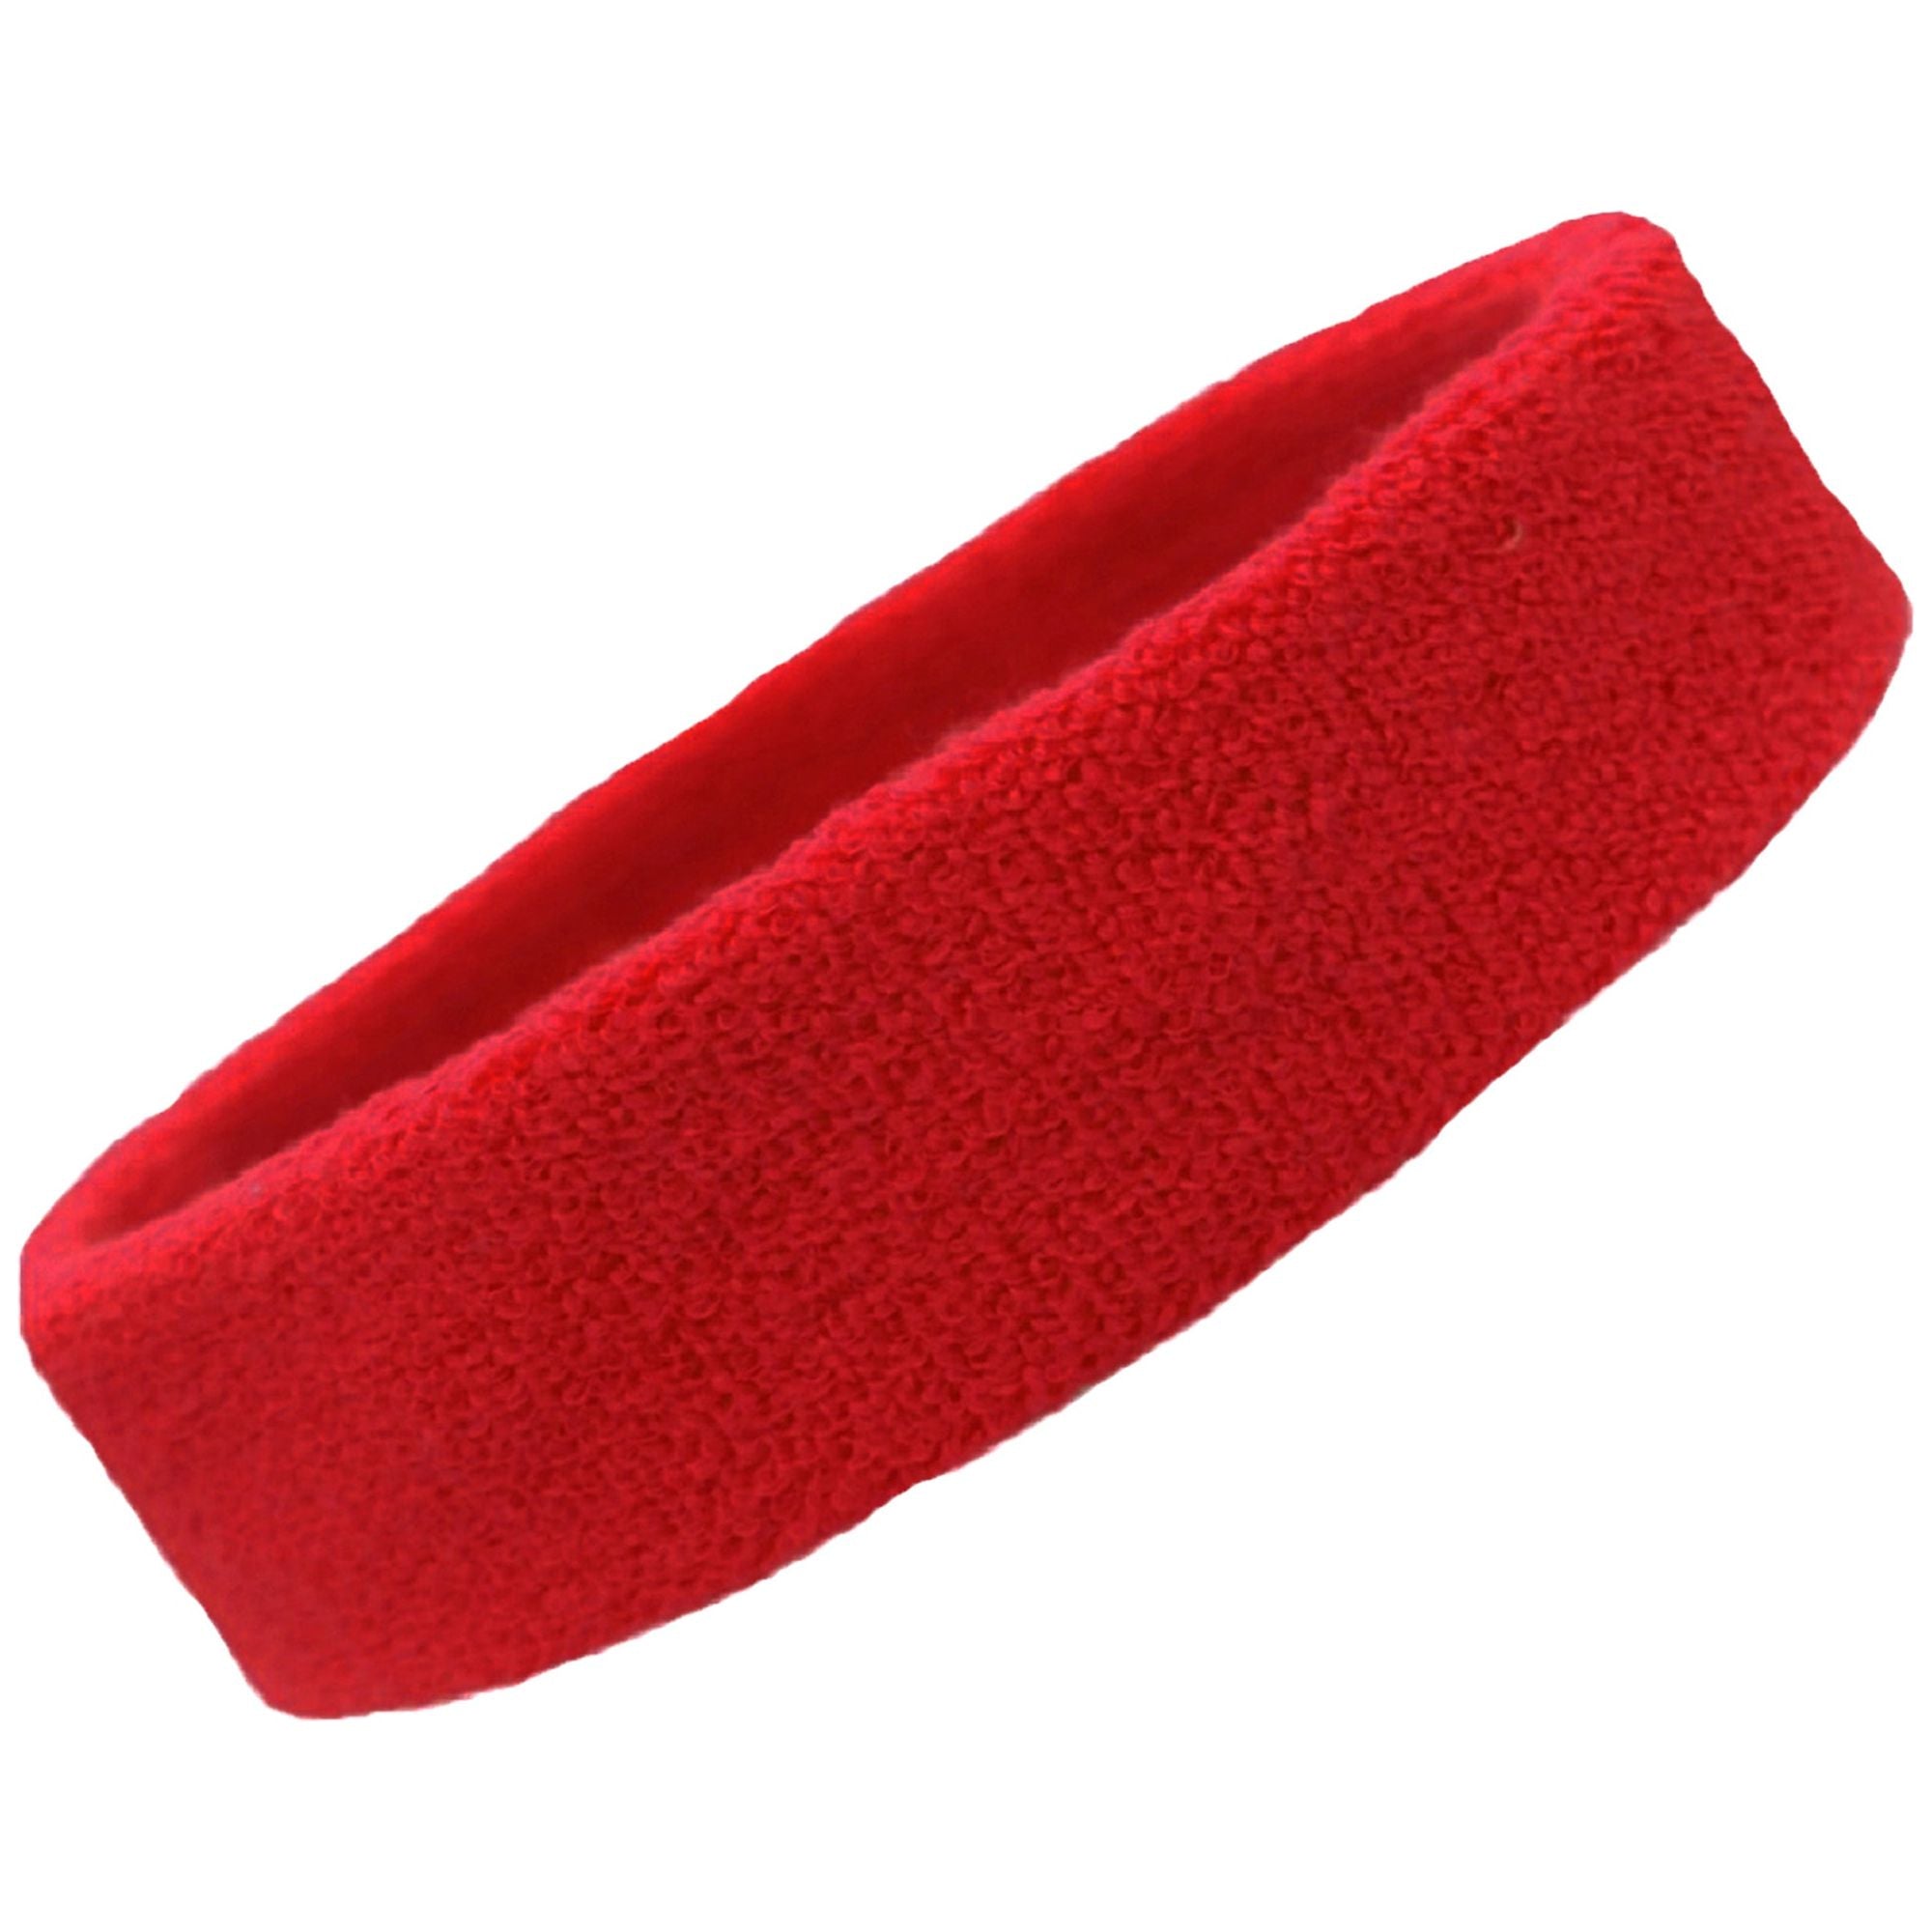 GOGO Sports Headband Sweatband Athletic Terry Cloth Head Band Red 